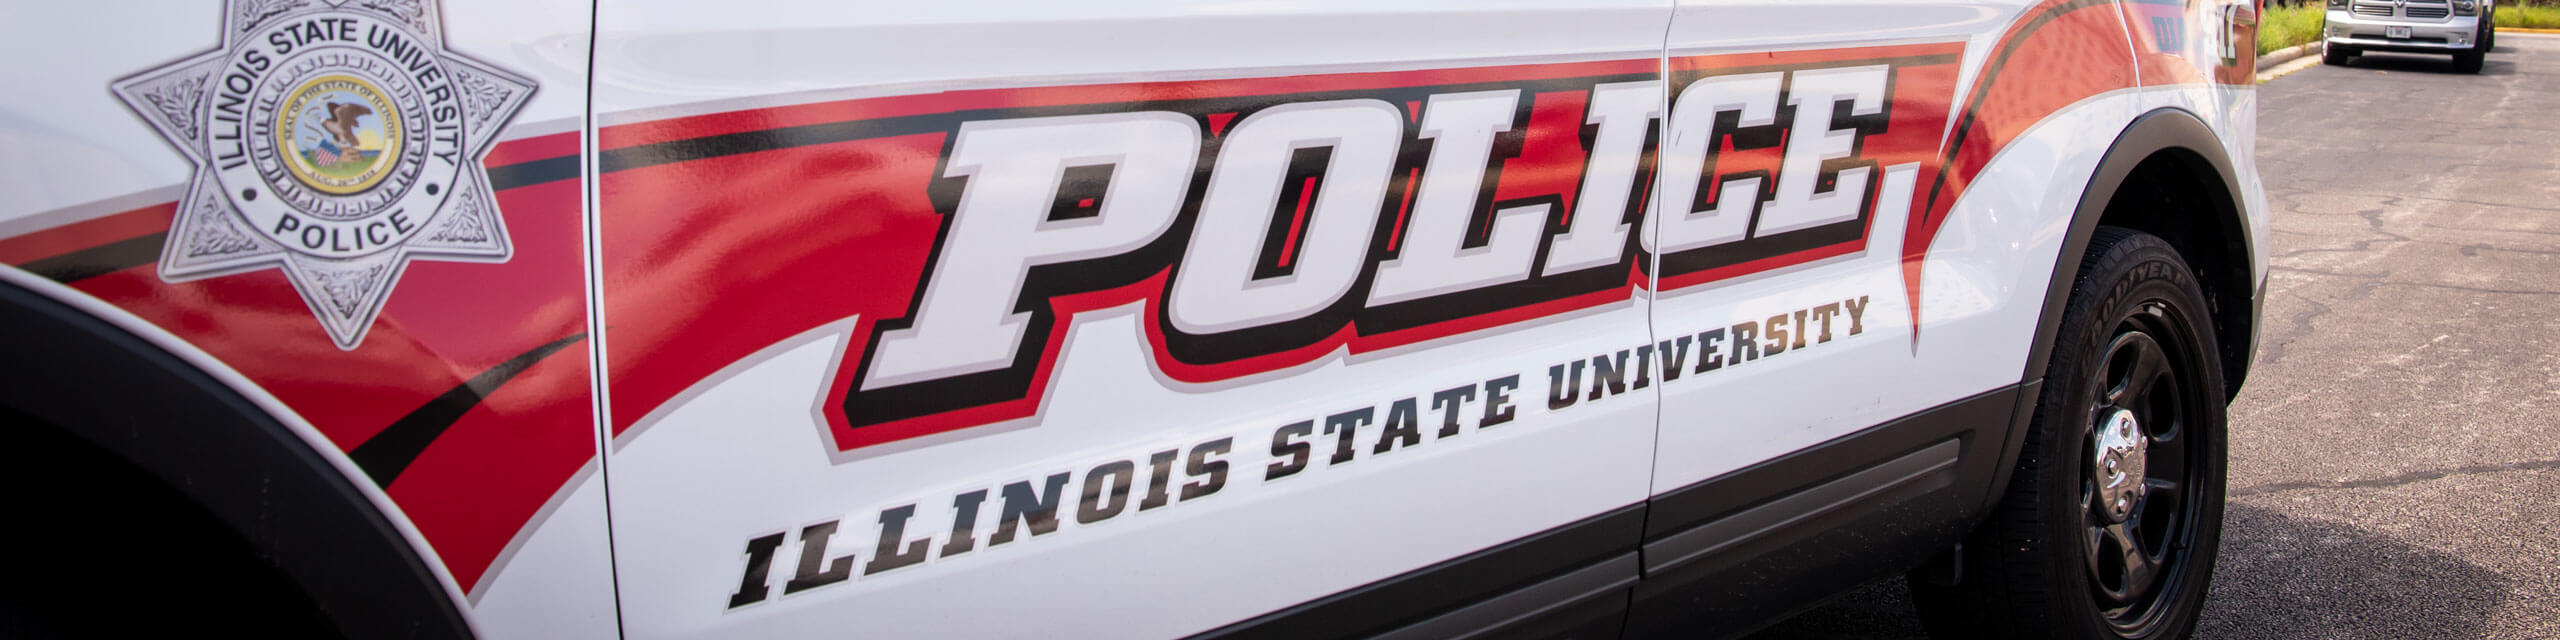 Services & Programs | University Police | Illinois State